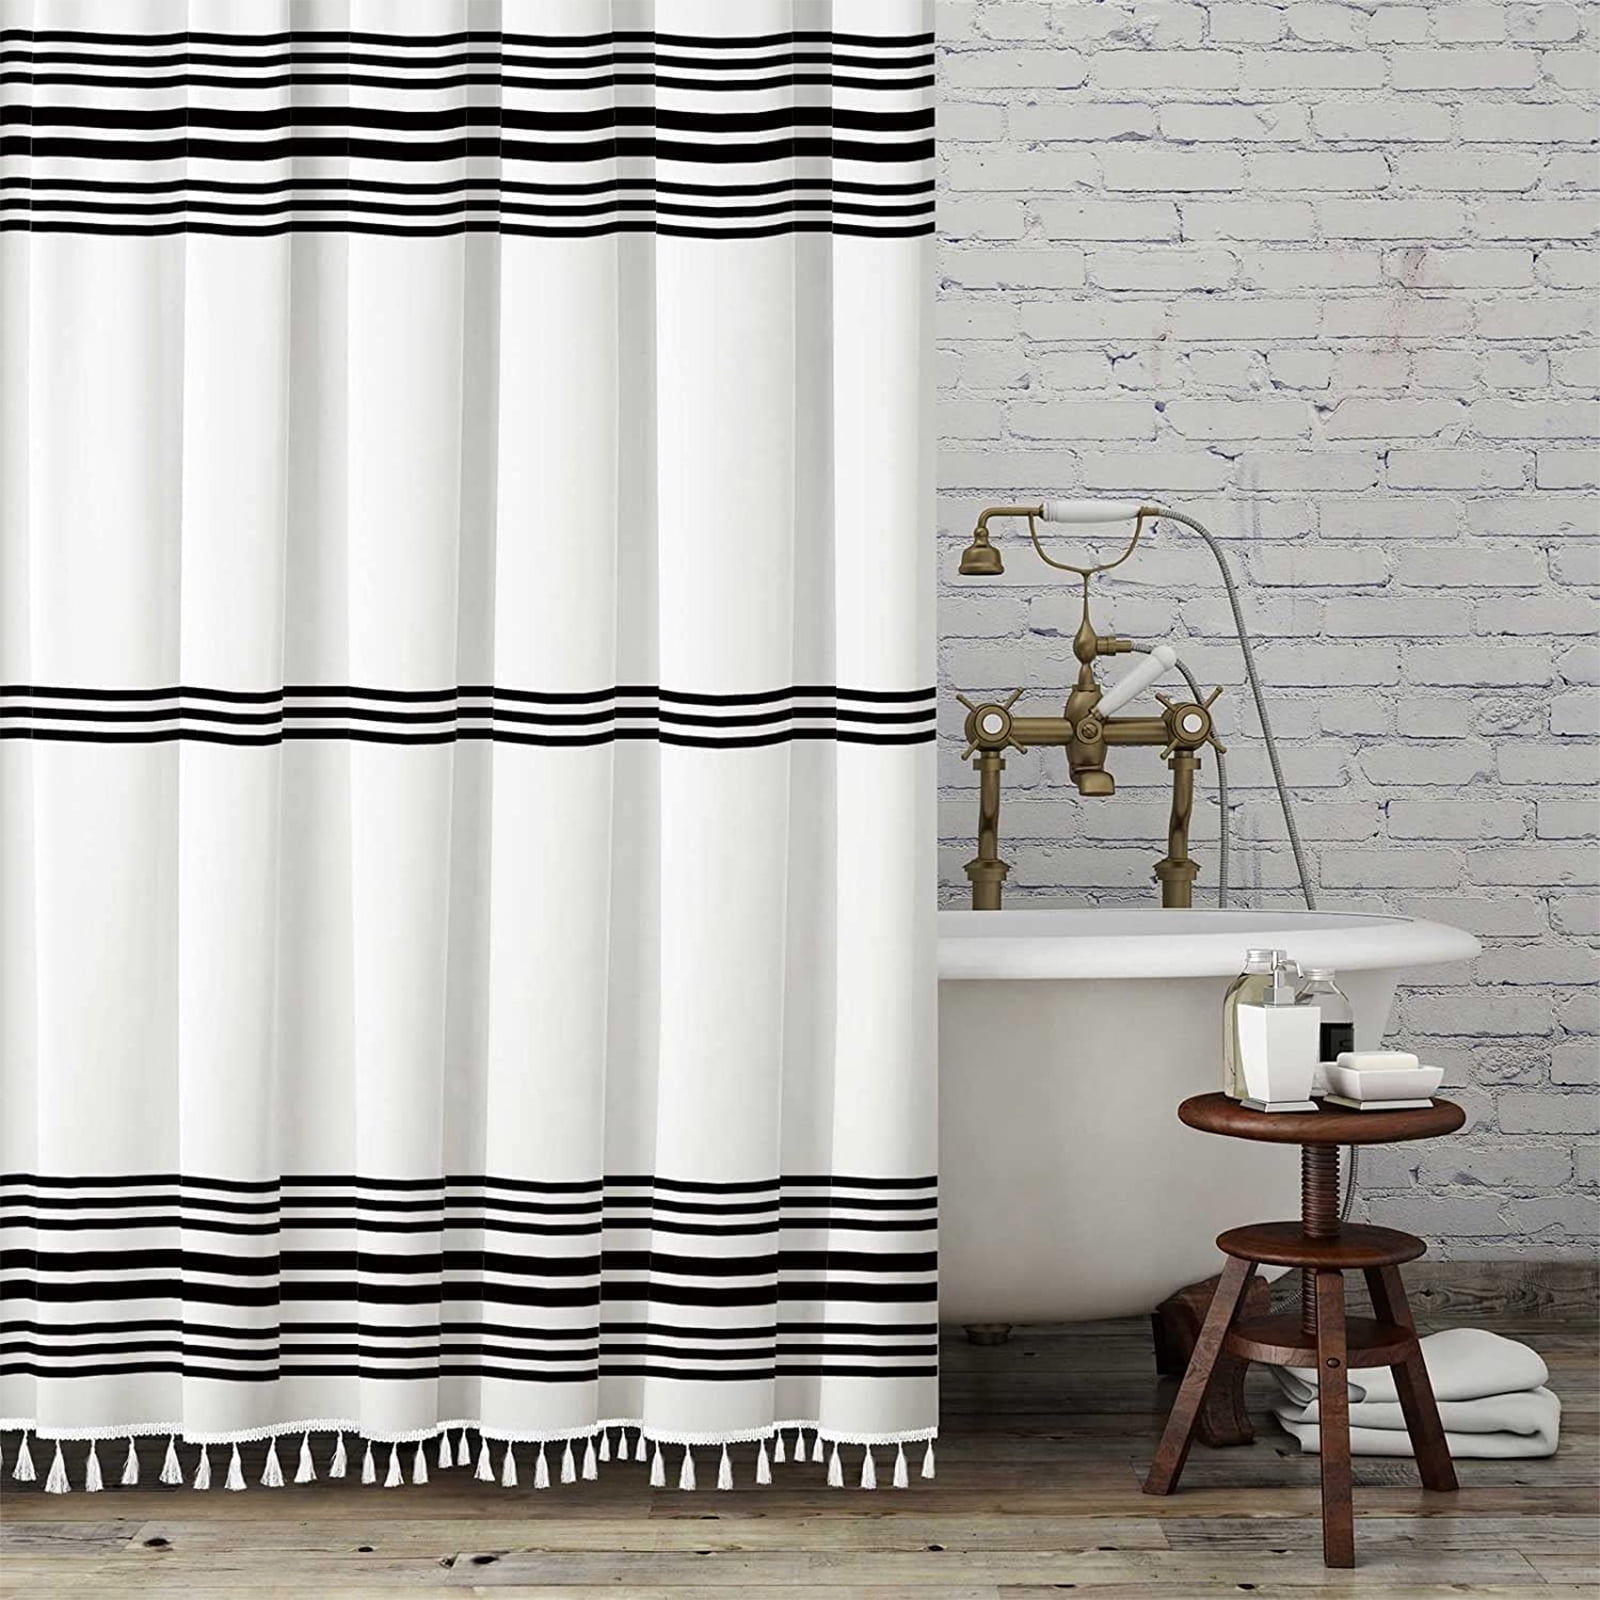 US 72x72" Waterproof Fabric Bathroom Bubble Gum African Girl Shower Curtain Set 